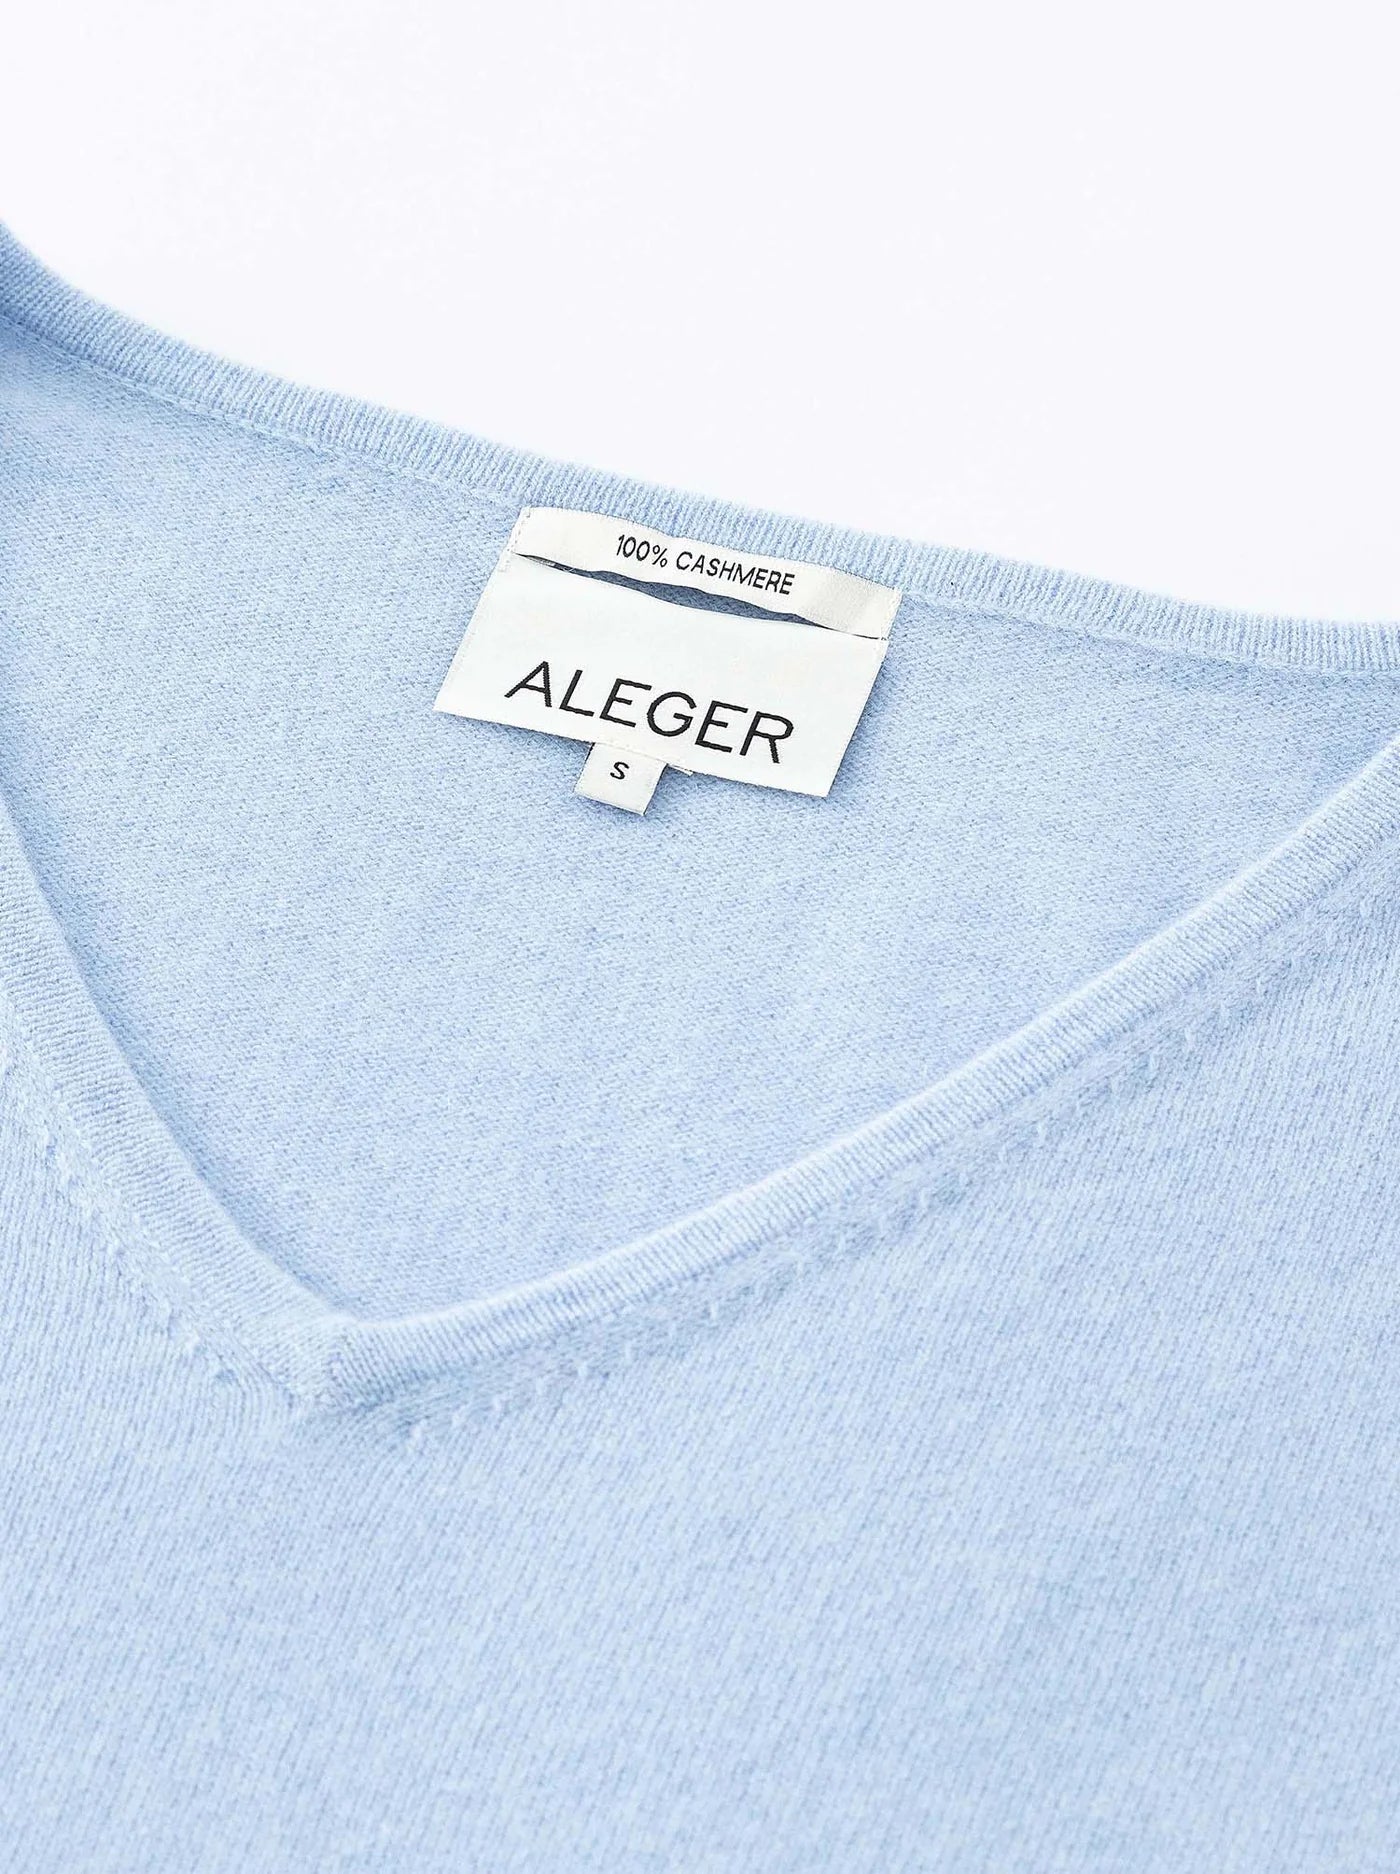 Aleger Cashmere - No. 29 Cashmere Oversized V Neck - Lake Blue